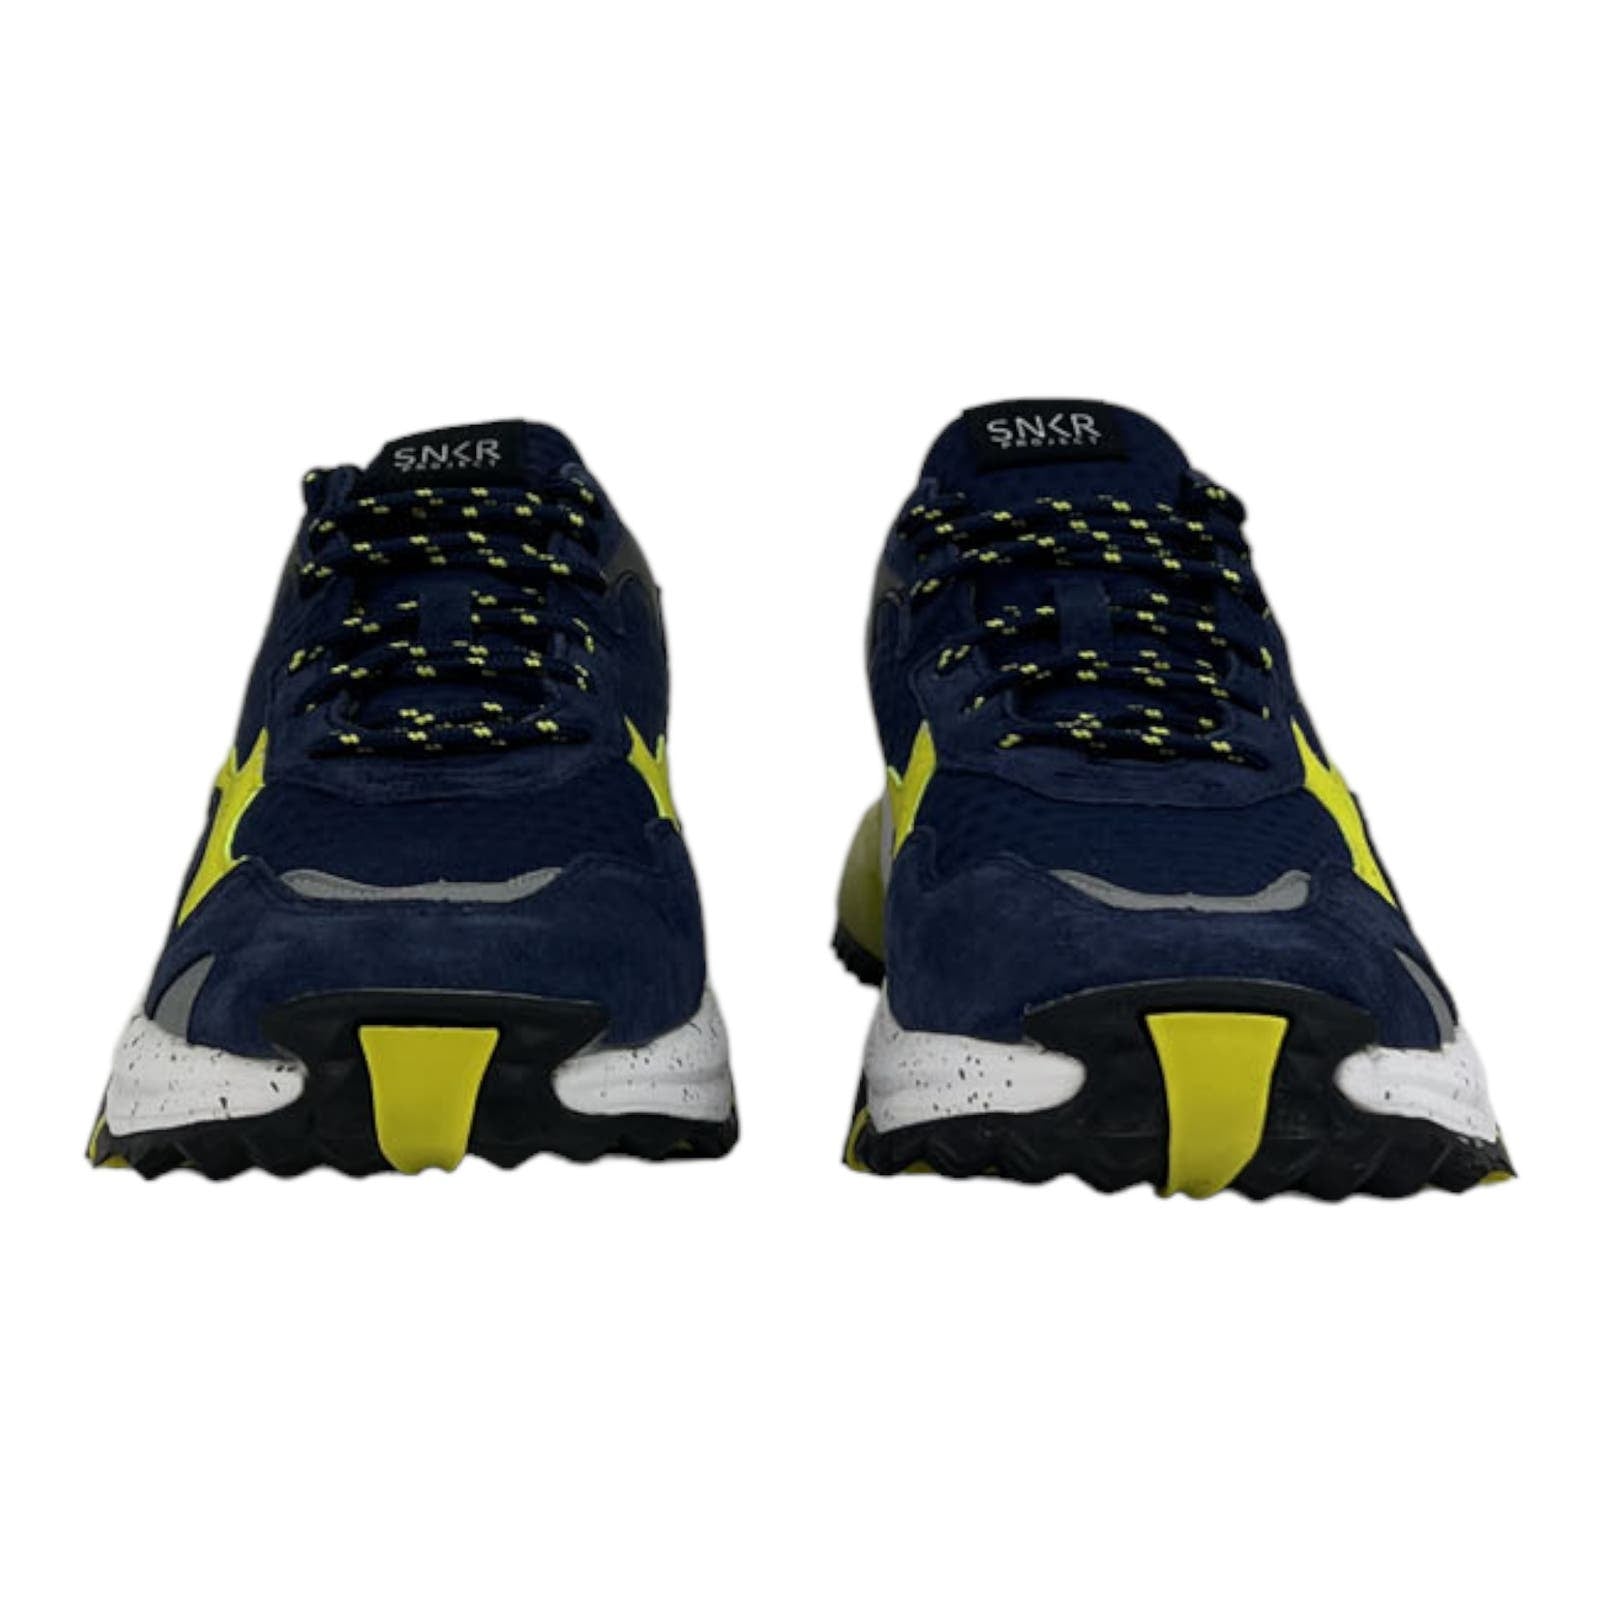 SNKR Project Men US 11.5 Blue-Yellow-White Prospect Park Sneakers